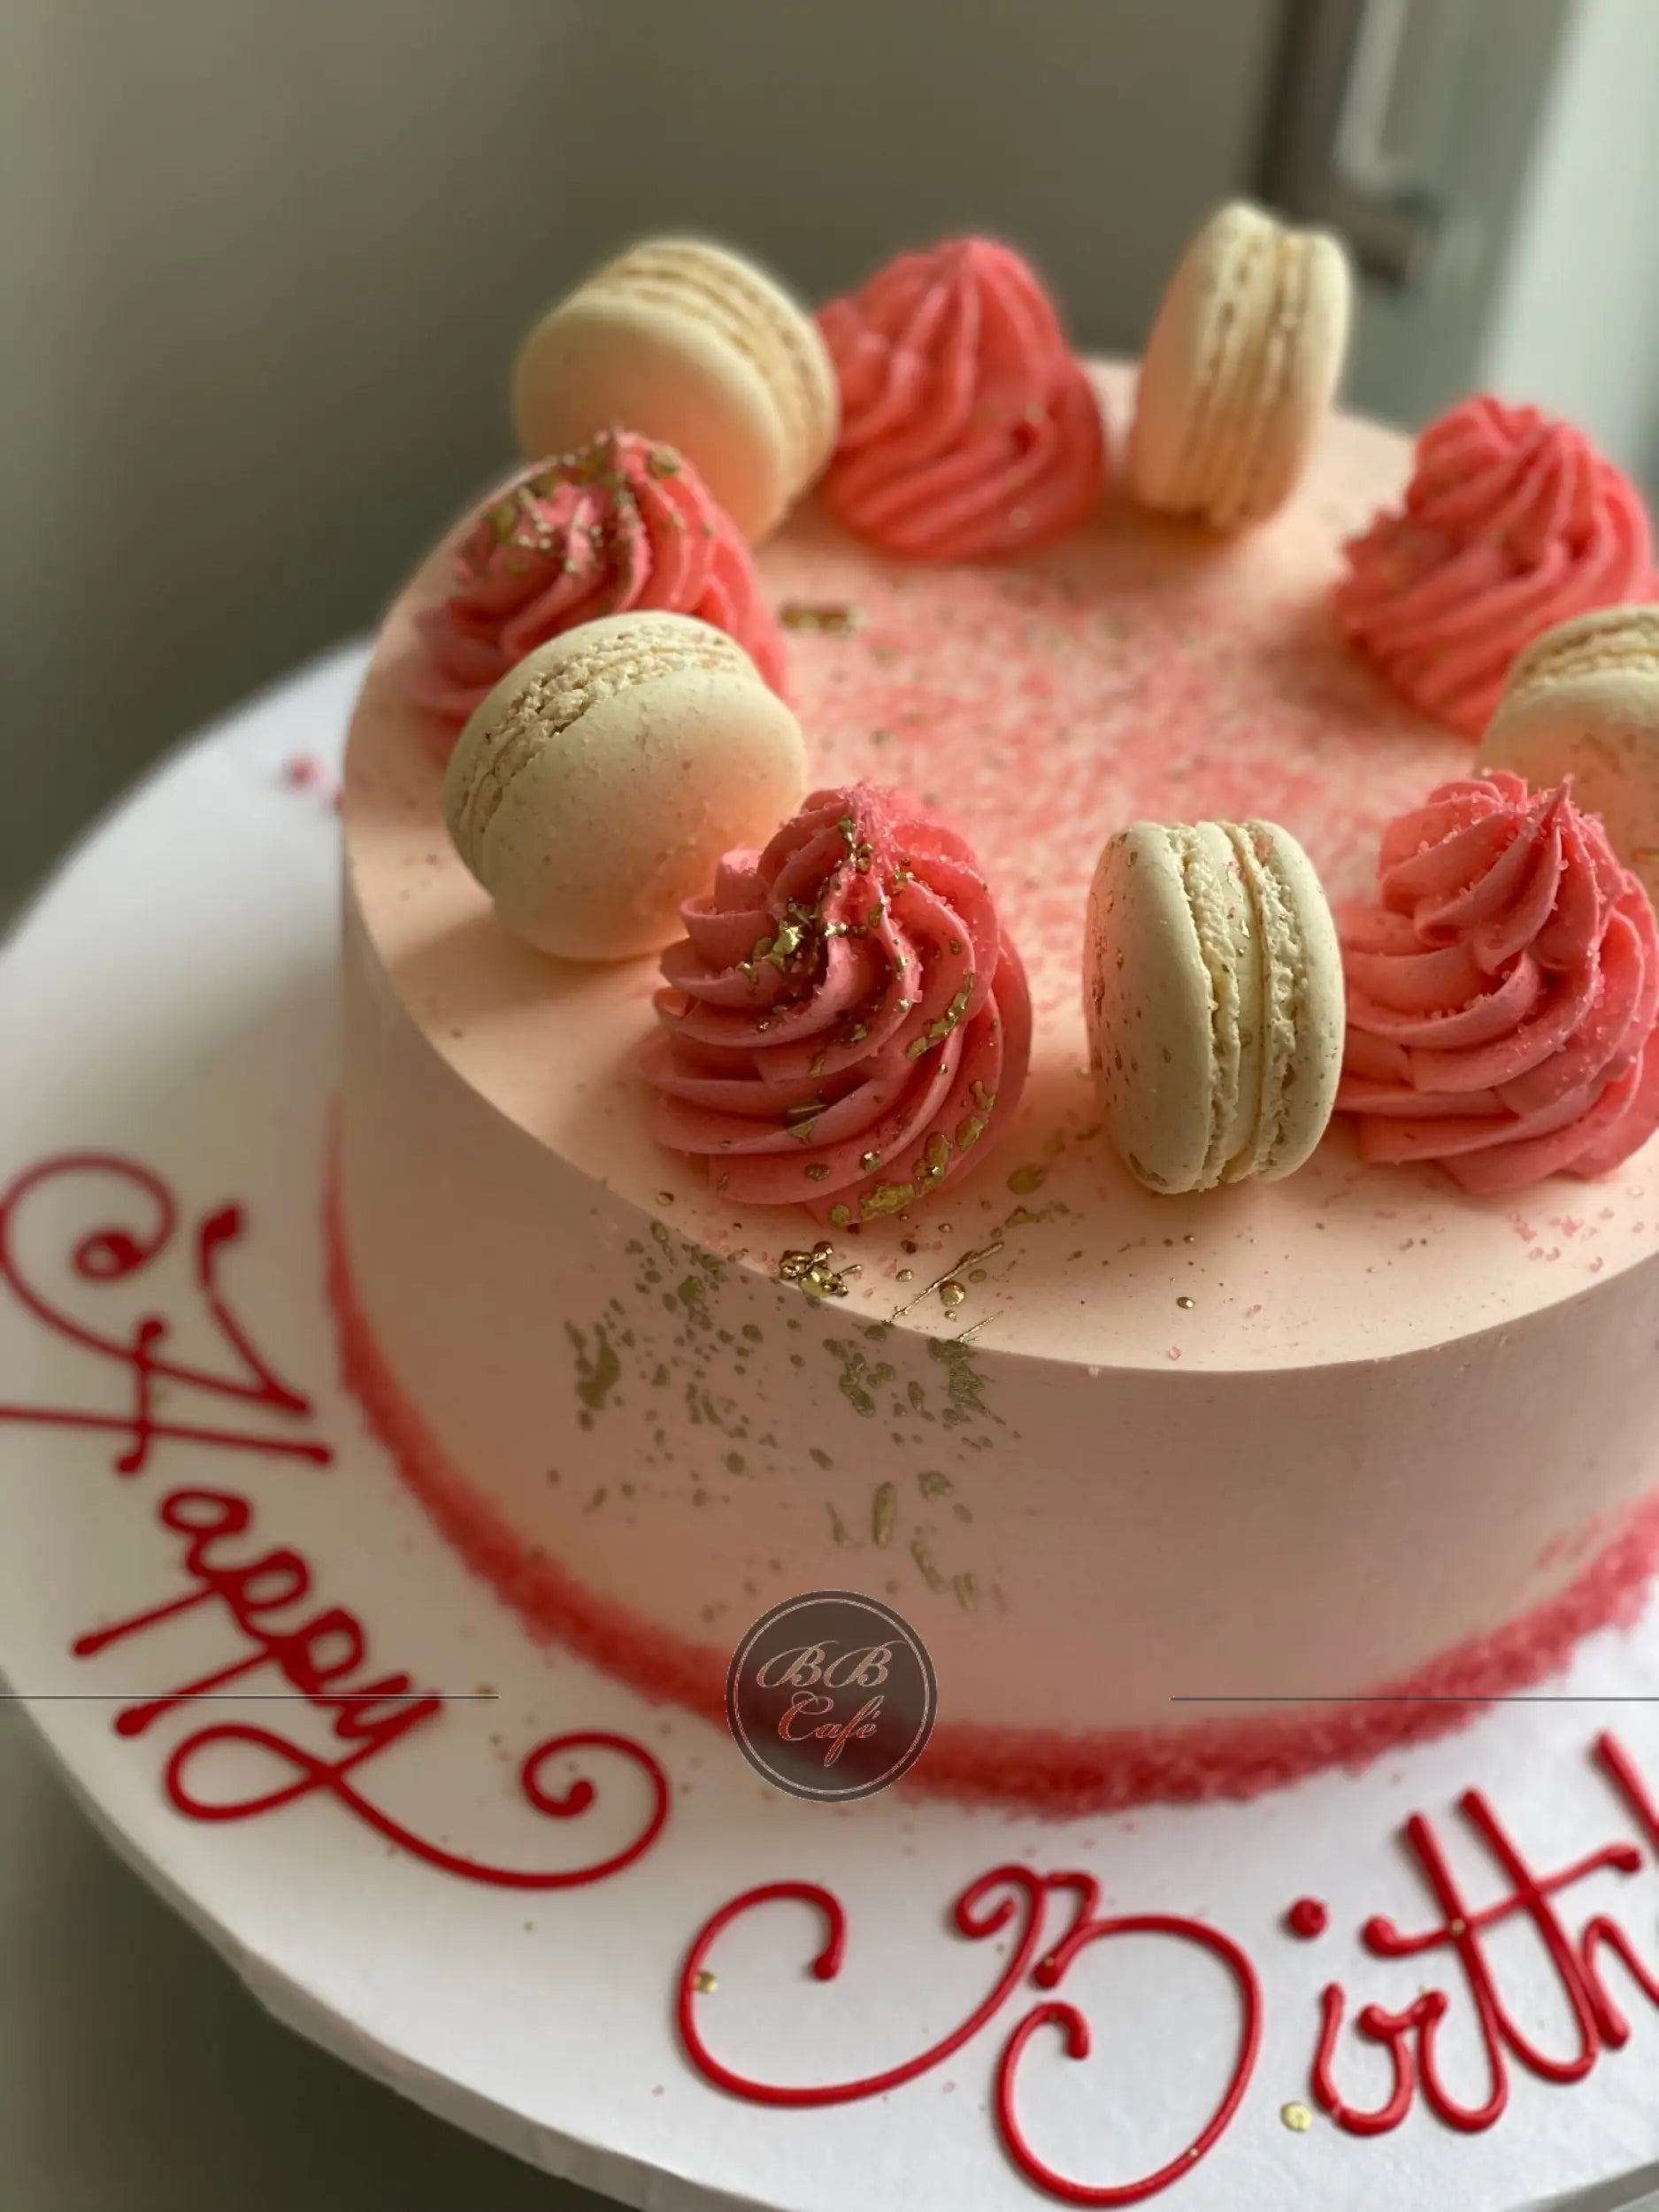 Macarons on whipped cream - custom cake